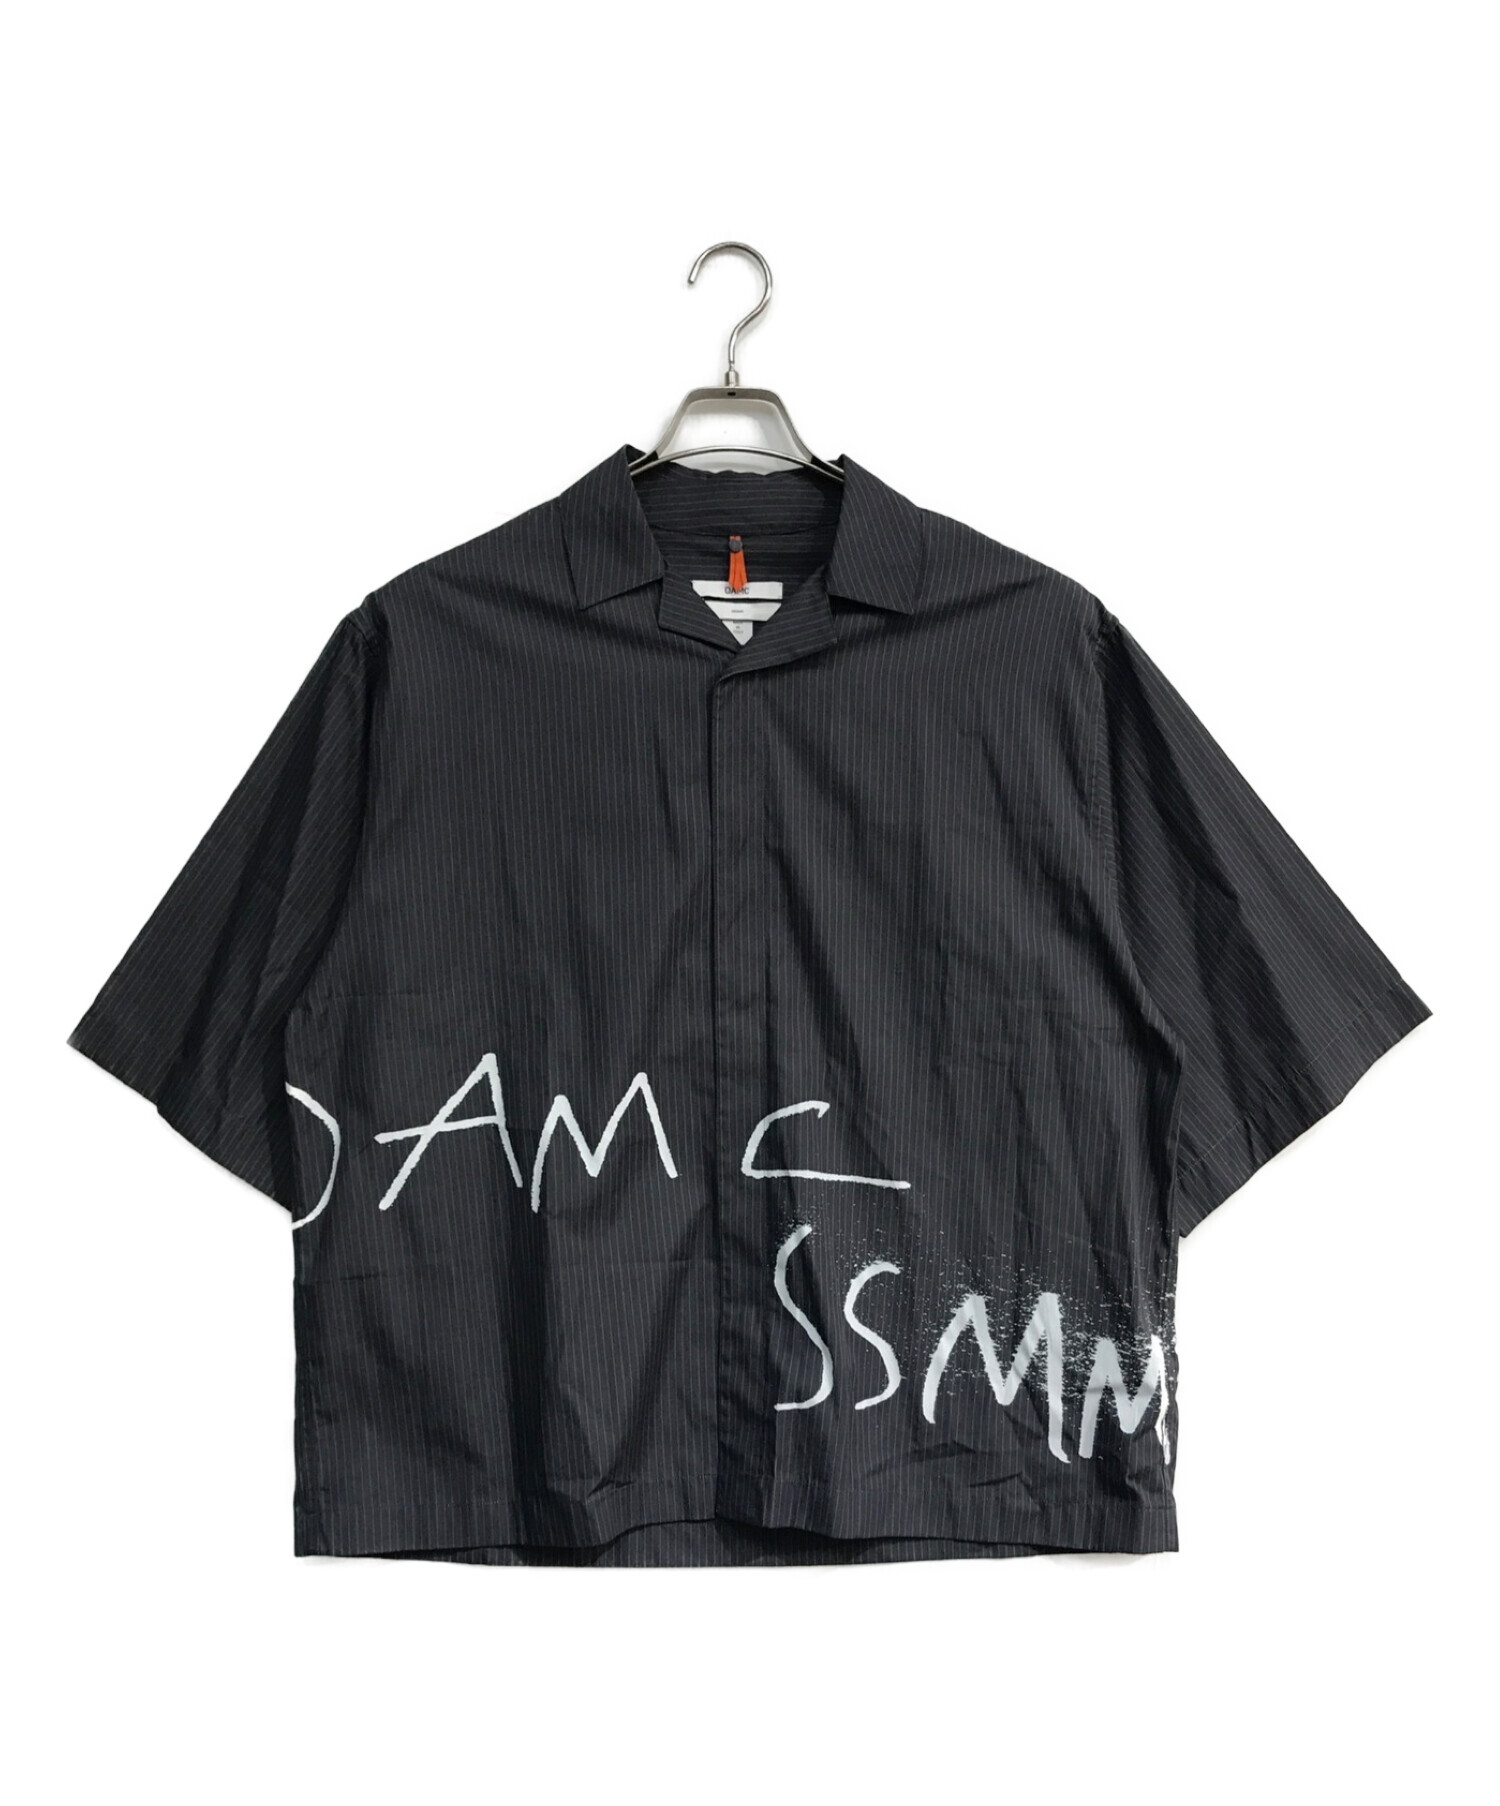 OAMC オーエーエムシー shirts シャツ S